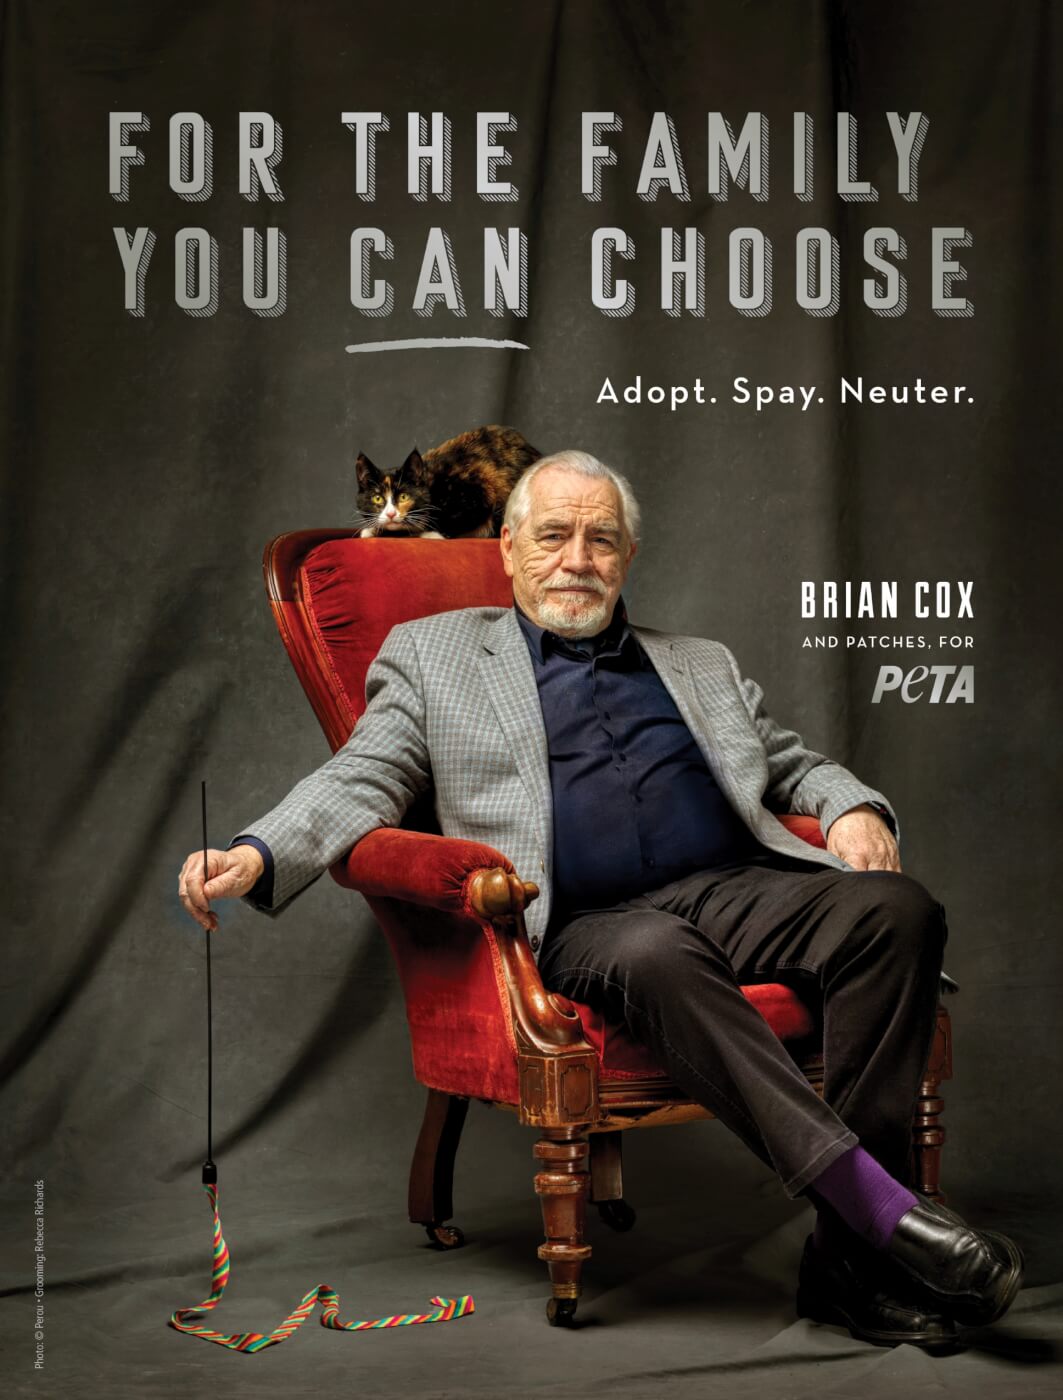 Brian Cox in PETA commercial